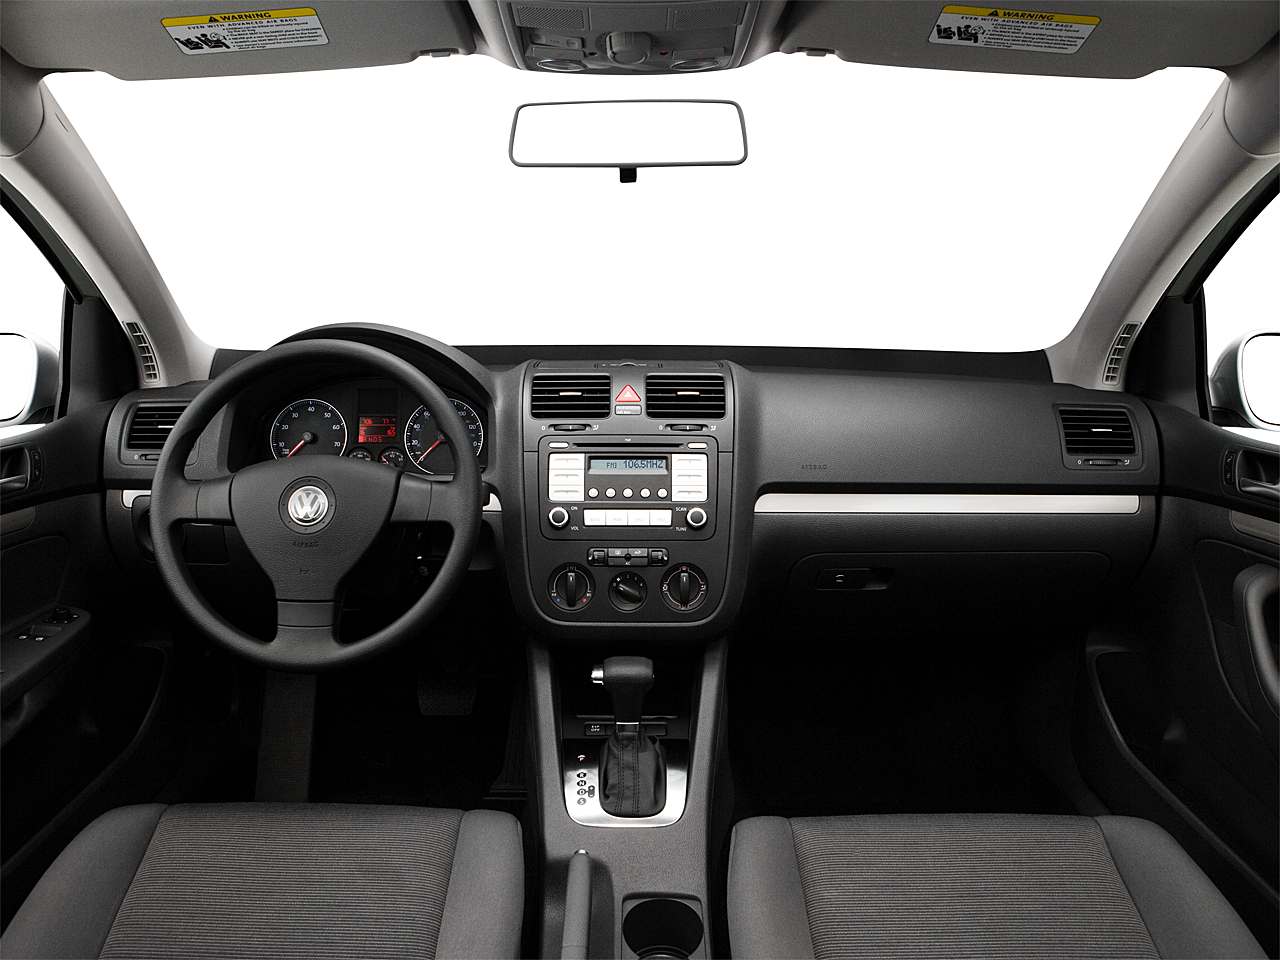 2009 Volkswagen Rabbit S 2dr Hatchback 6A - Research - GrooveCar